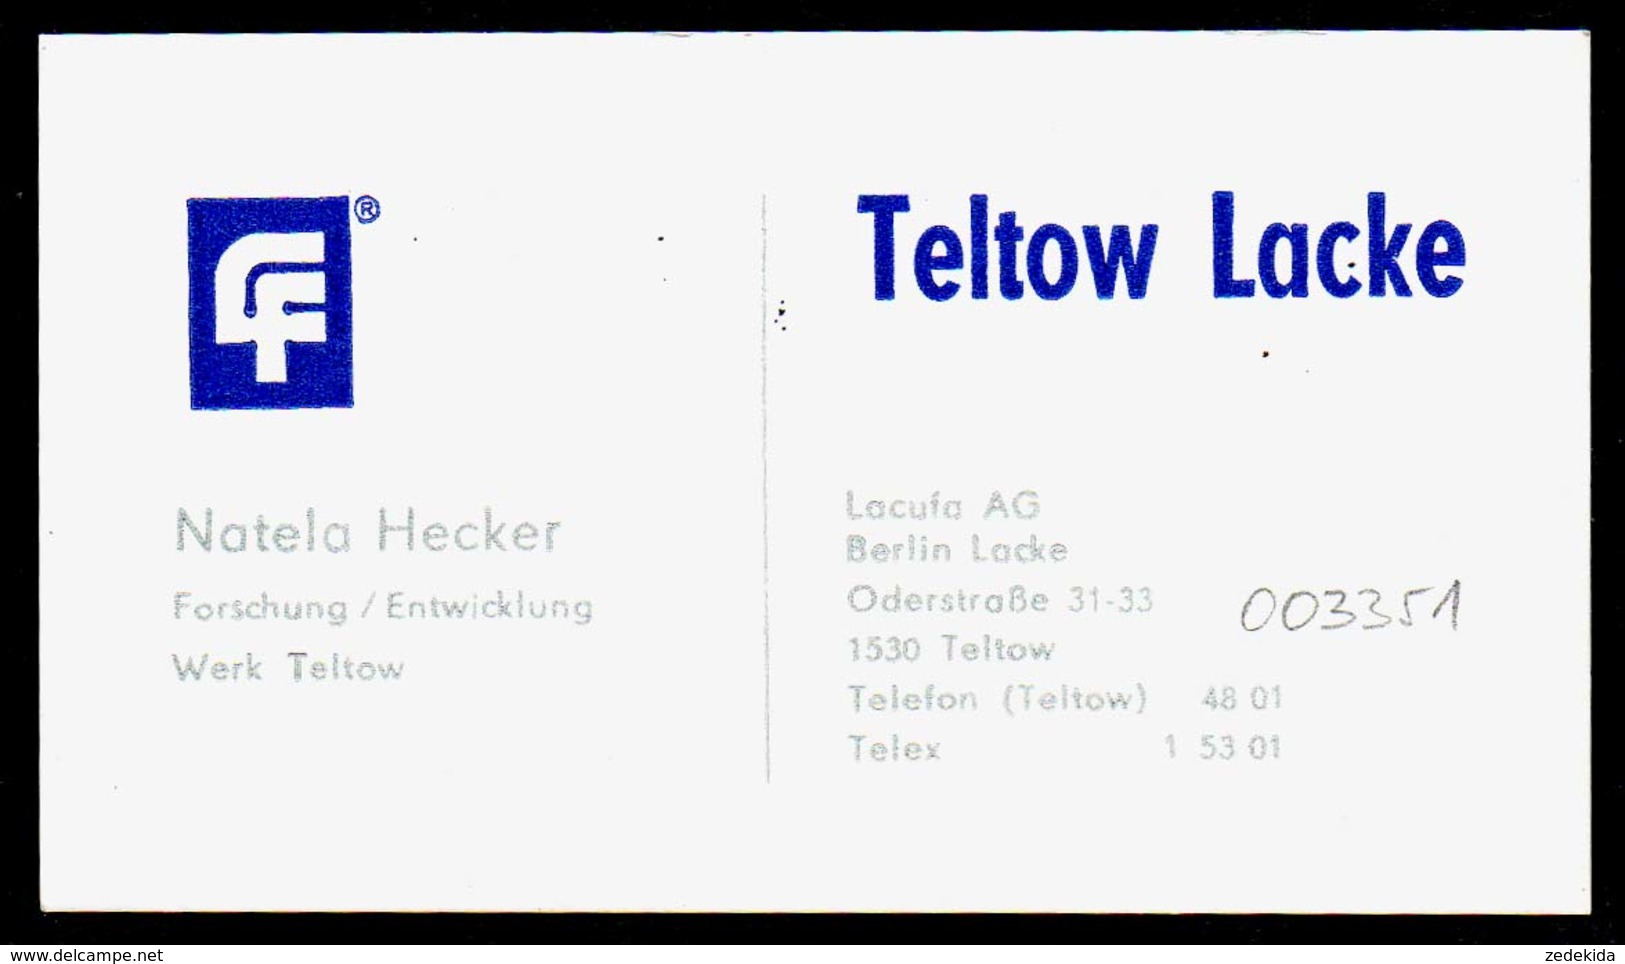 B7335 - Berlin Teltow - Lacufa Lacke - Natela Hecker - Visitenkarte - Visitenkarten